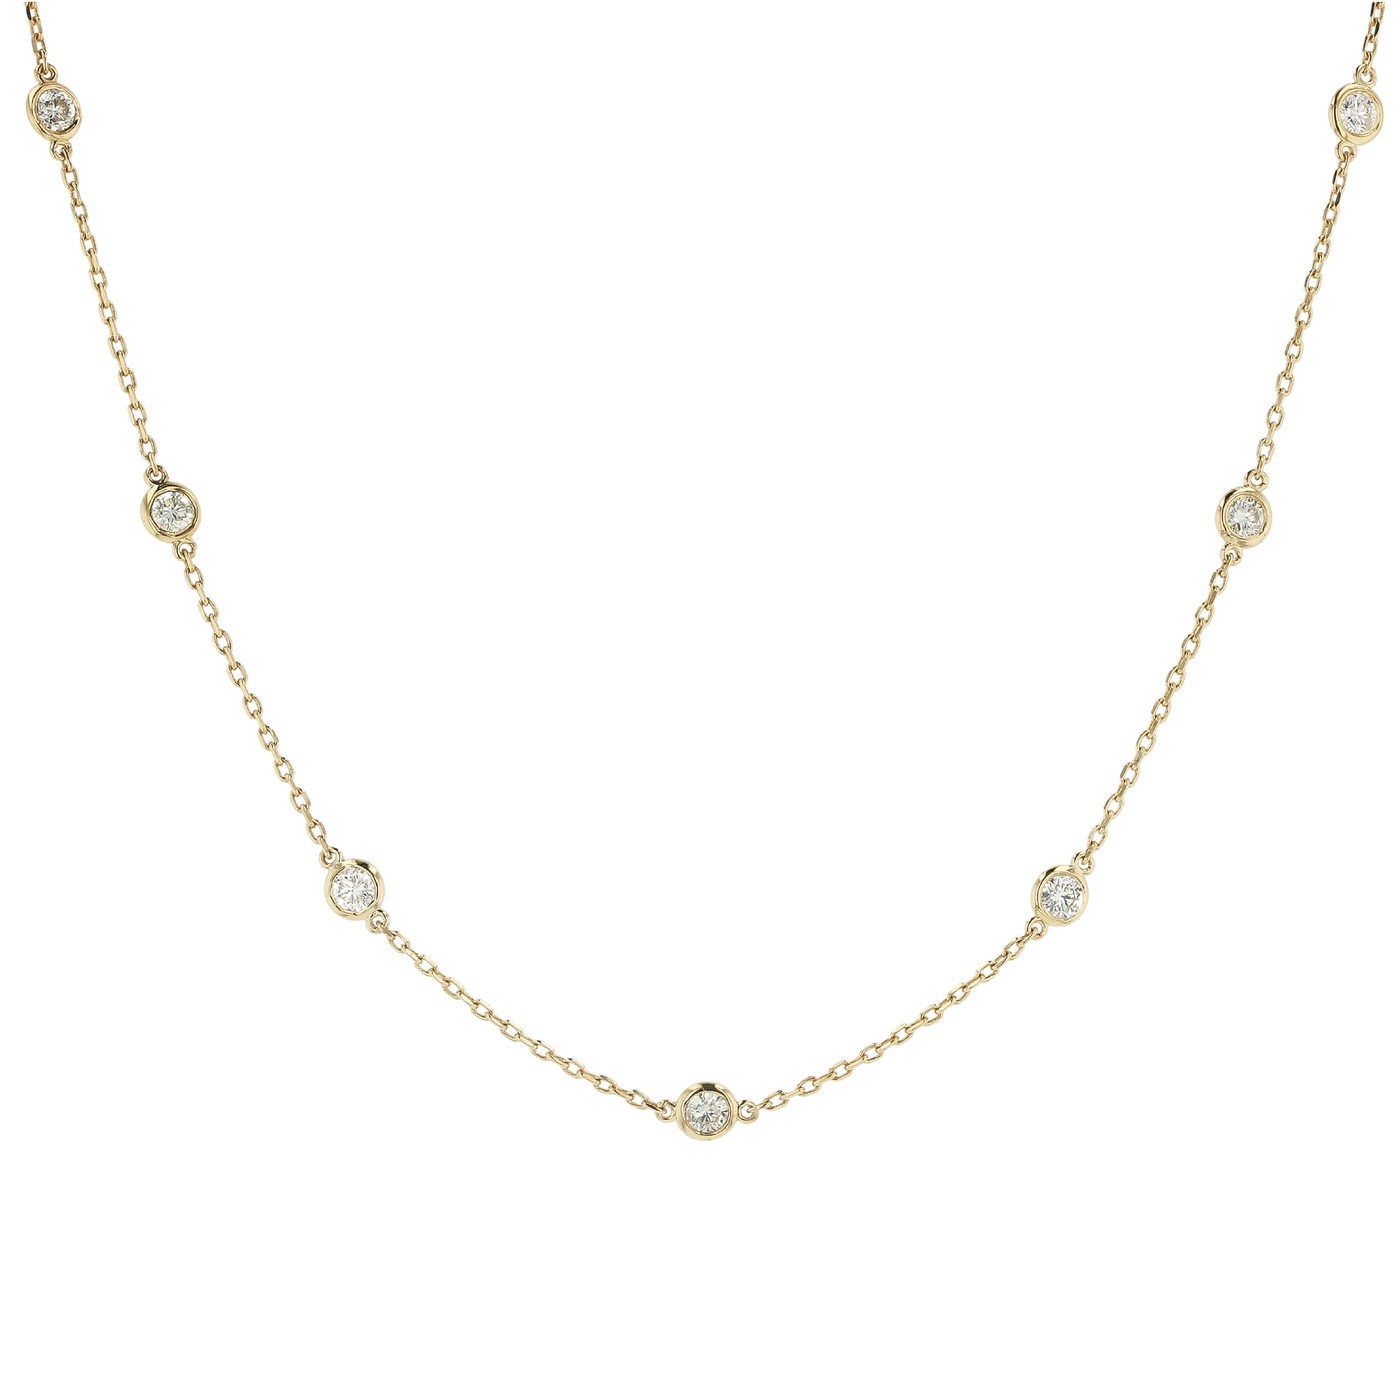 "Arms Length Diamonds" 1.50 CTTW Diamond Necklace